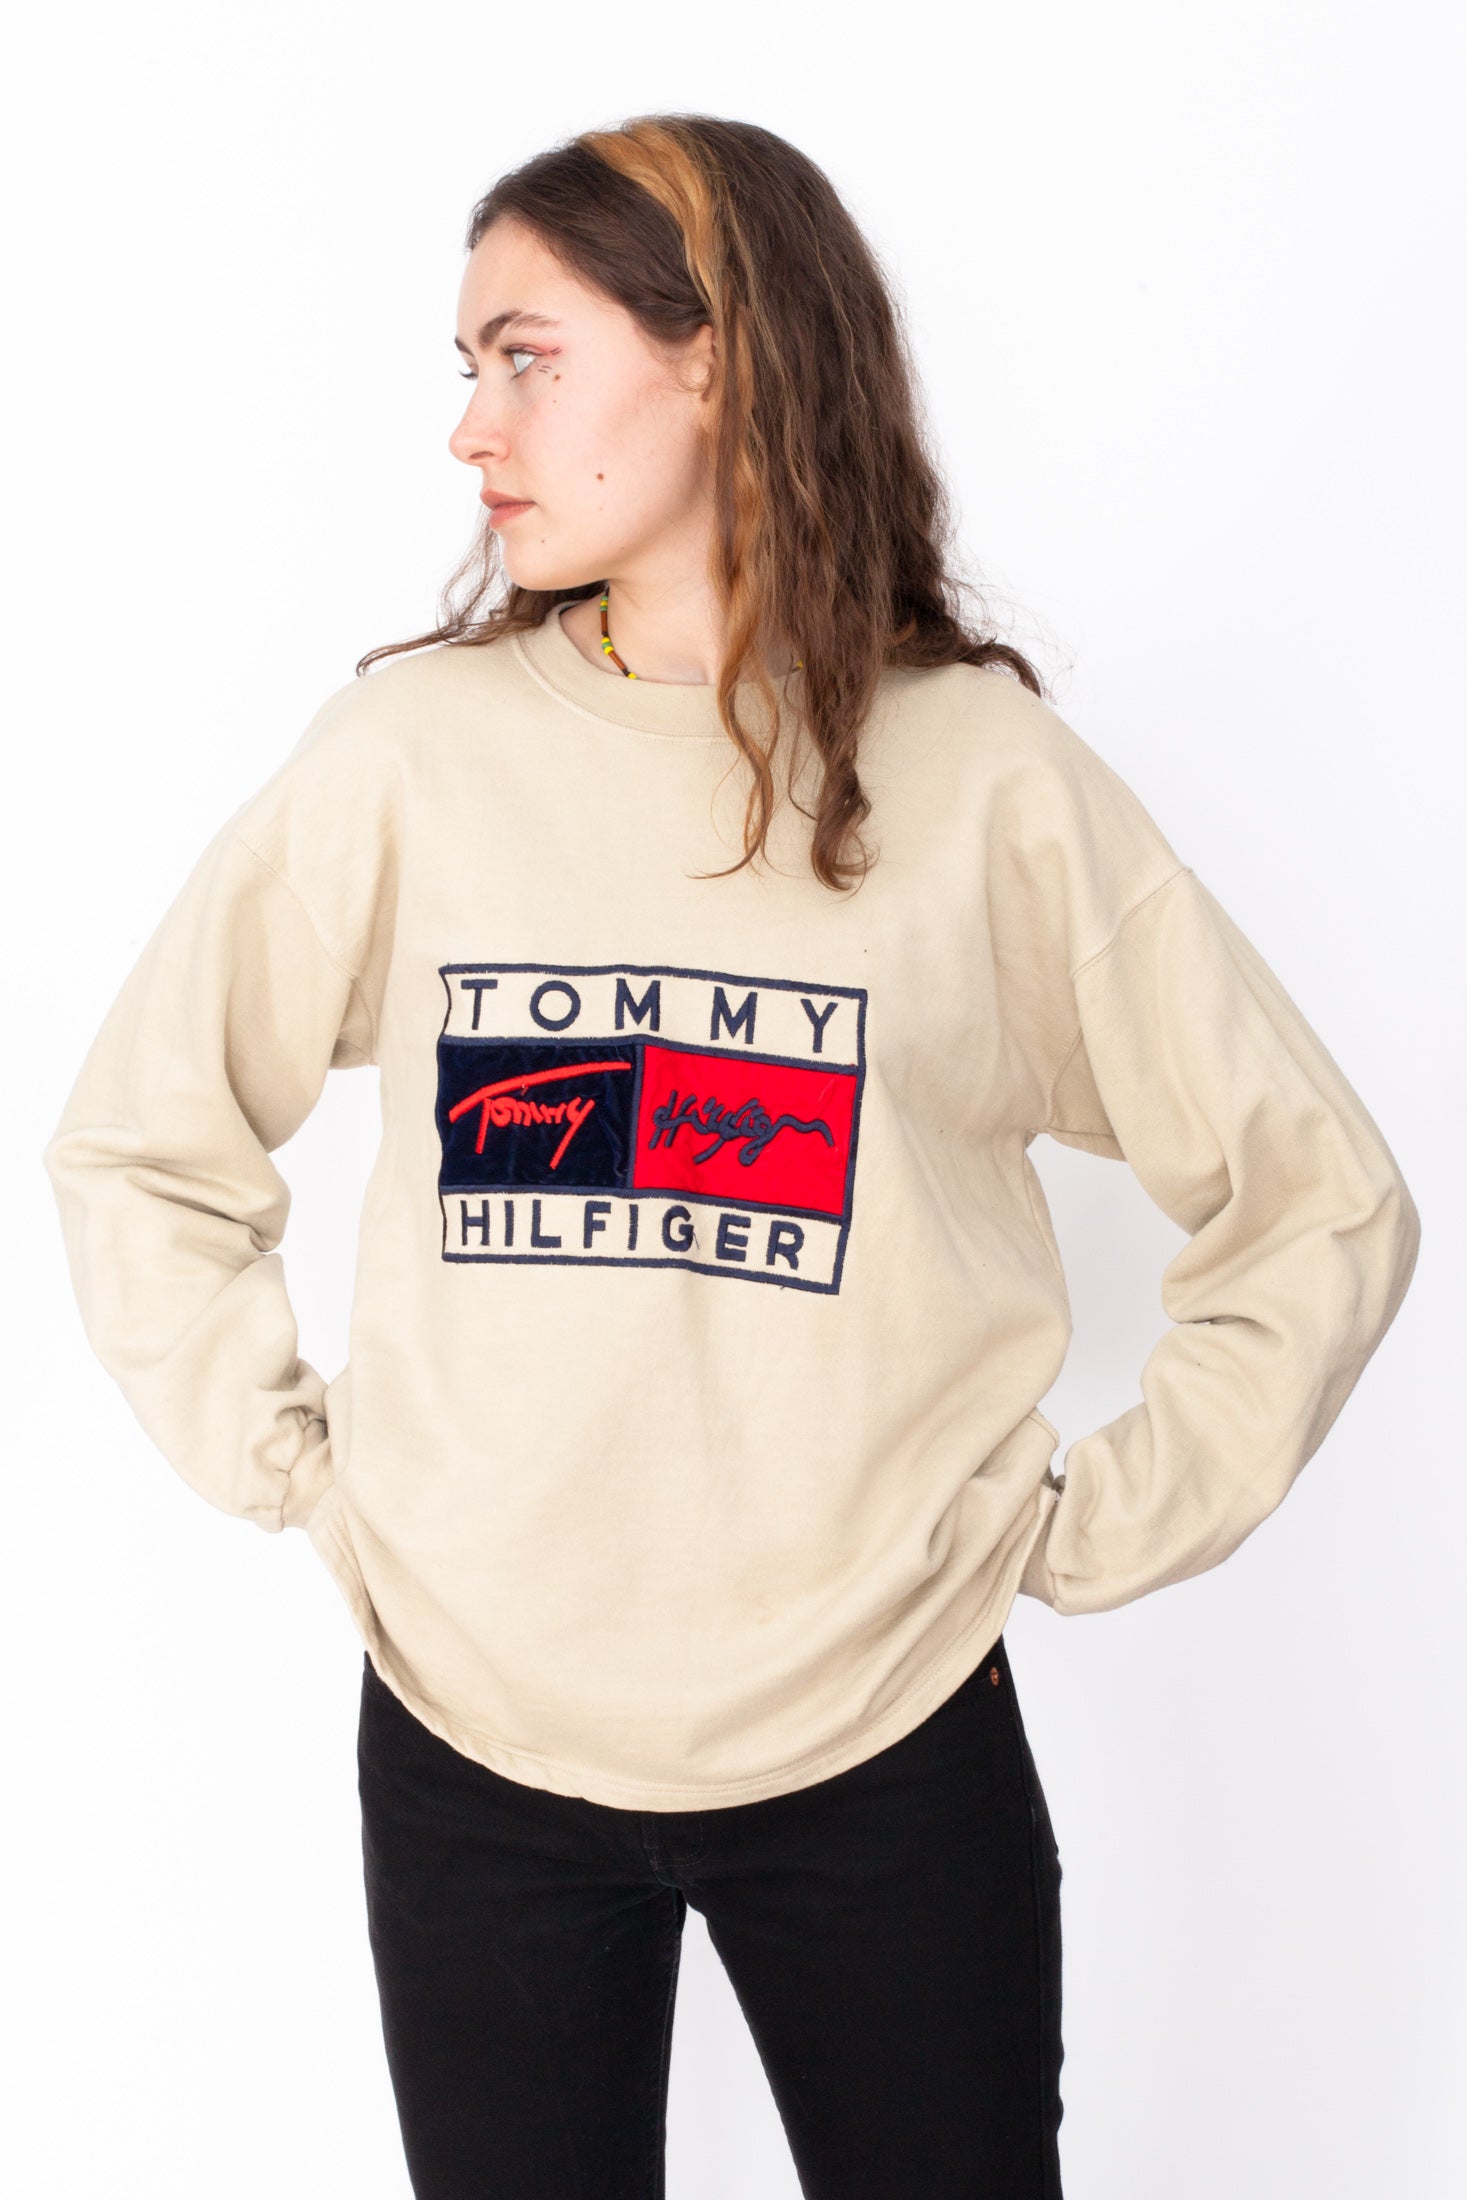 Not Logo – RARE Vintage Tommy Big Too Hilfiger 90s Sweatshirt Sweet